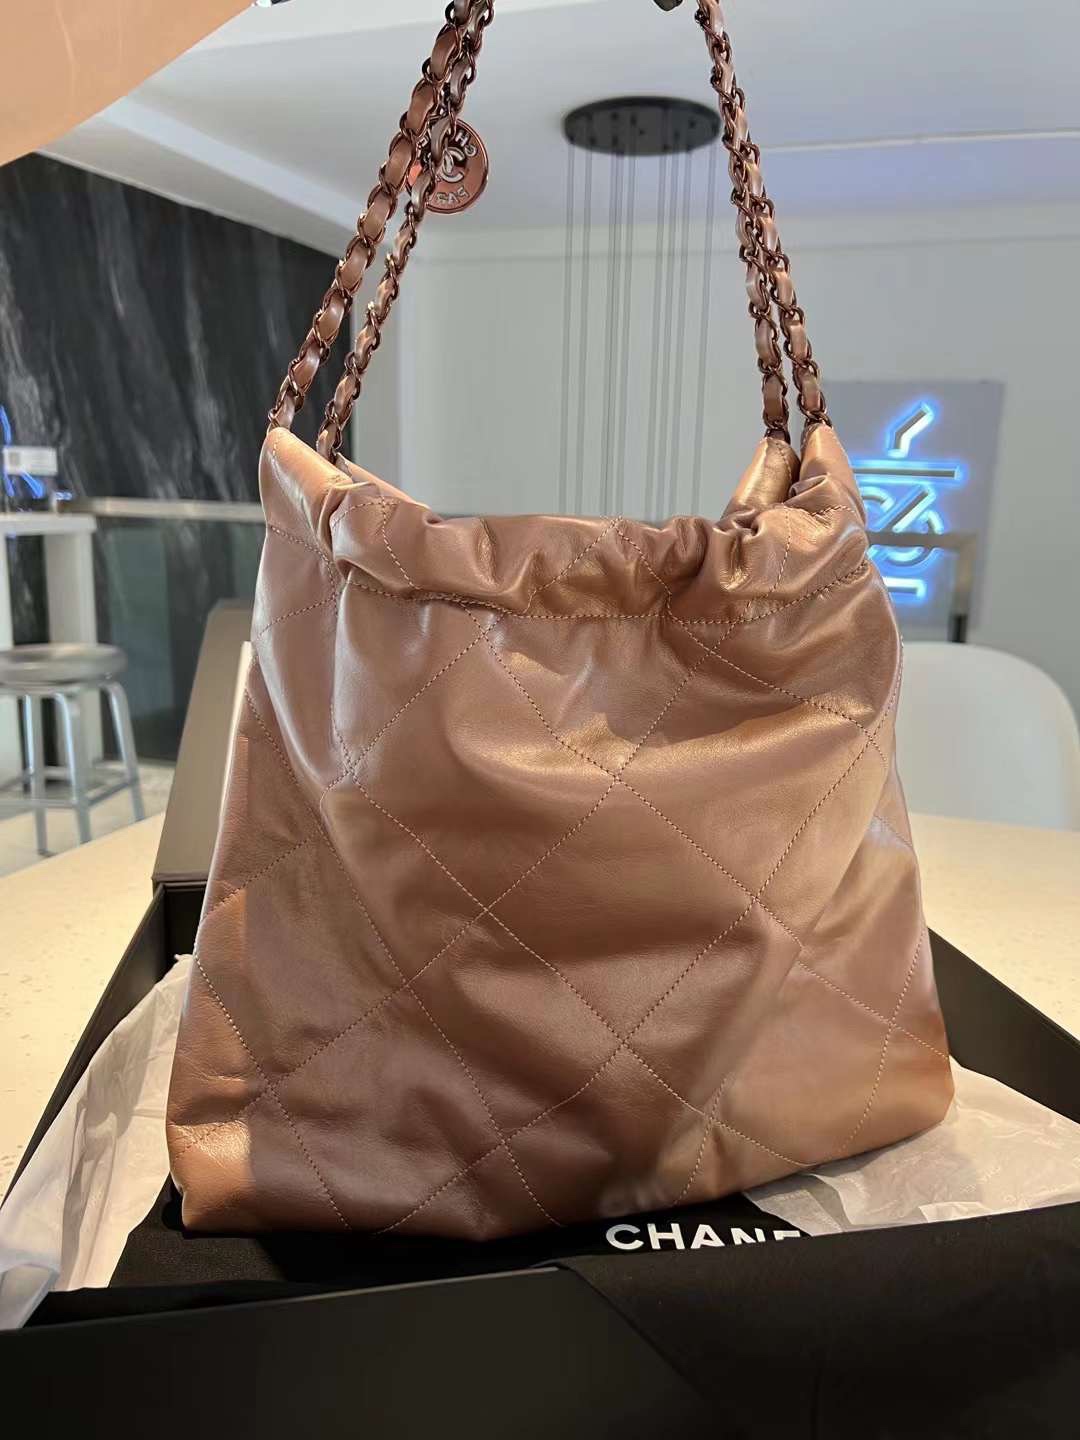 【P2220】香奈儿包包官网 Chanel22年新款珠光裸粉色22 bag单肩包购物袋